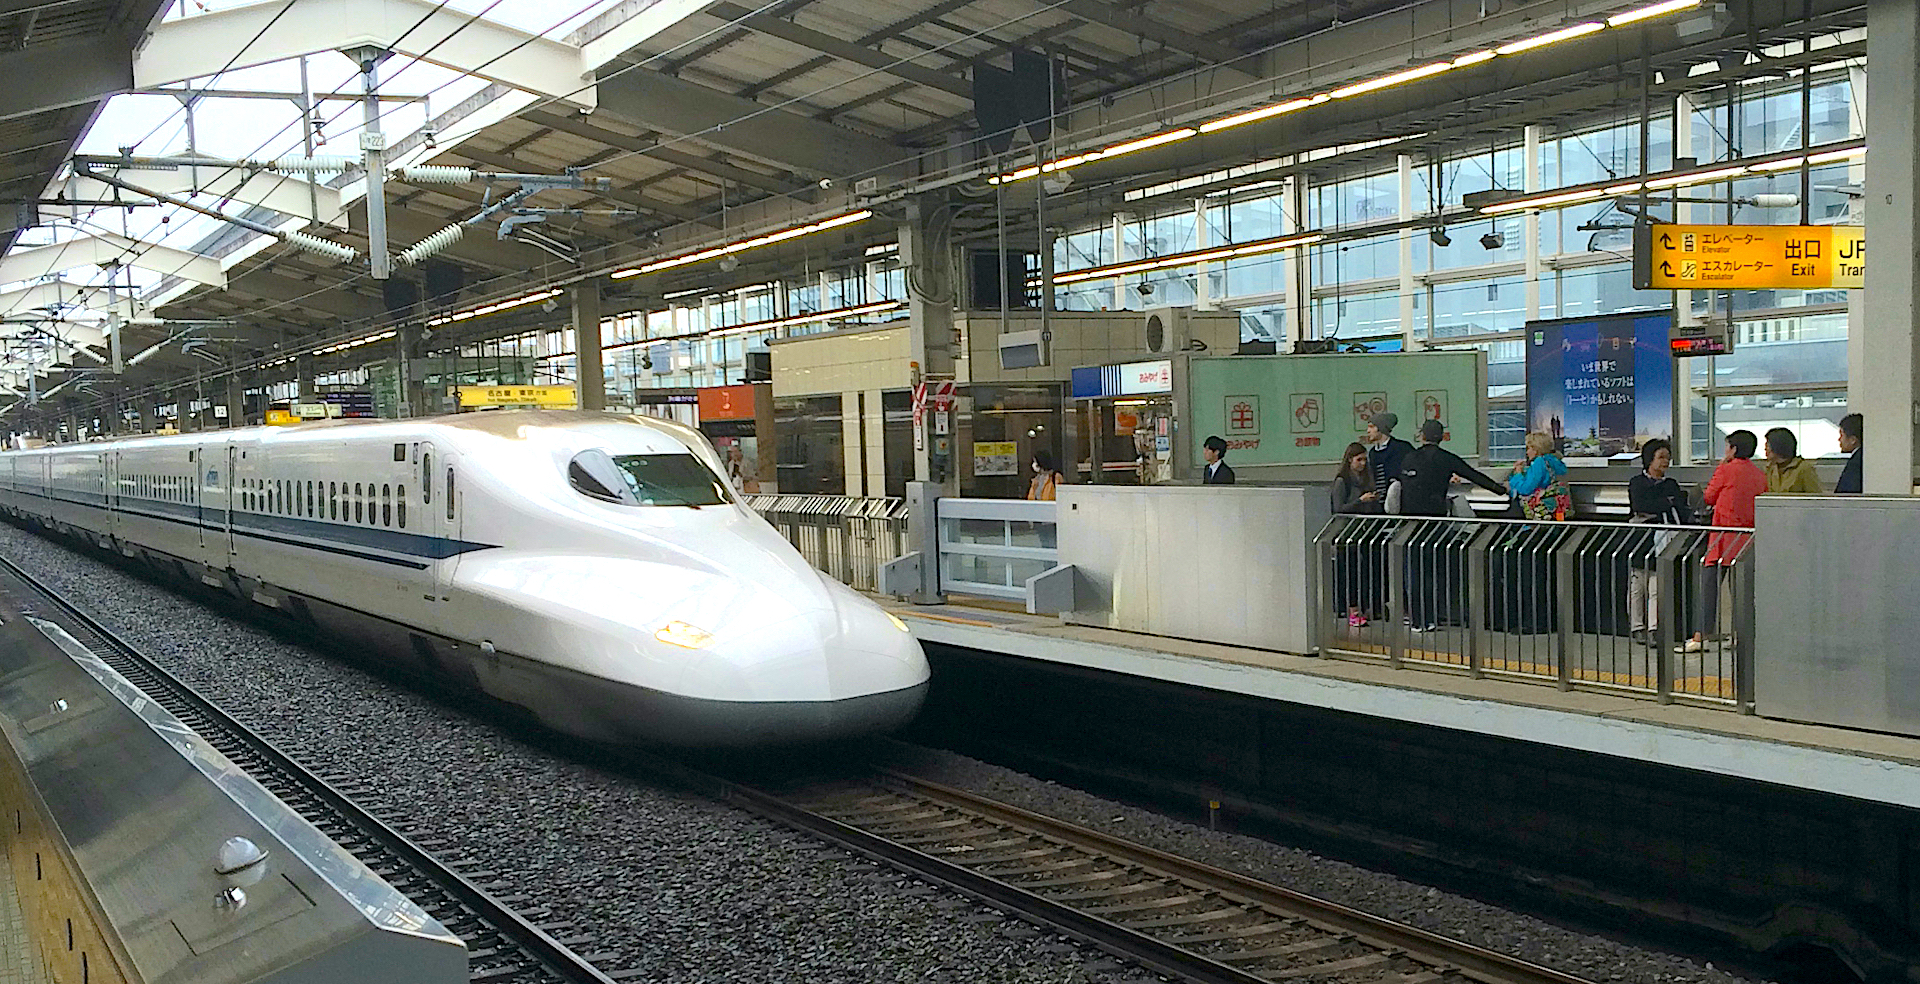 The Shinkansen entering the train station in Kyoto